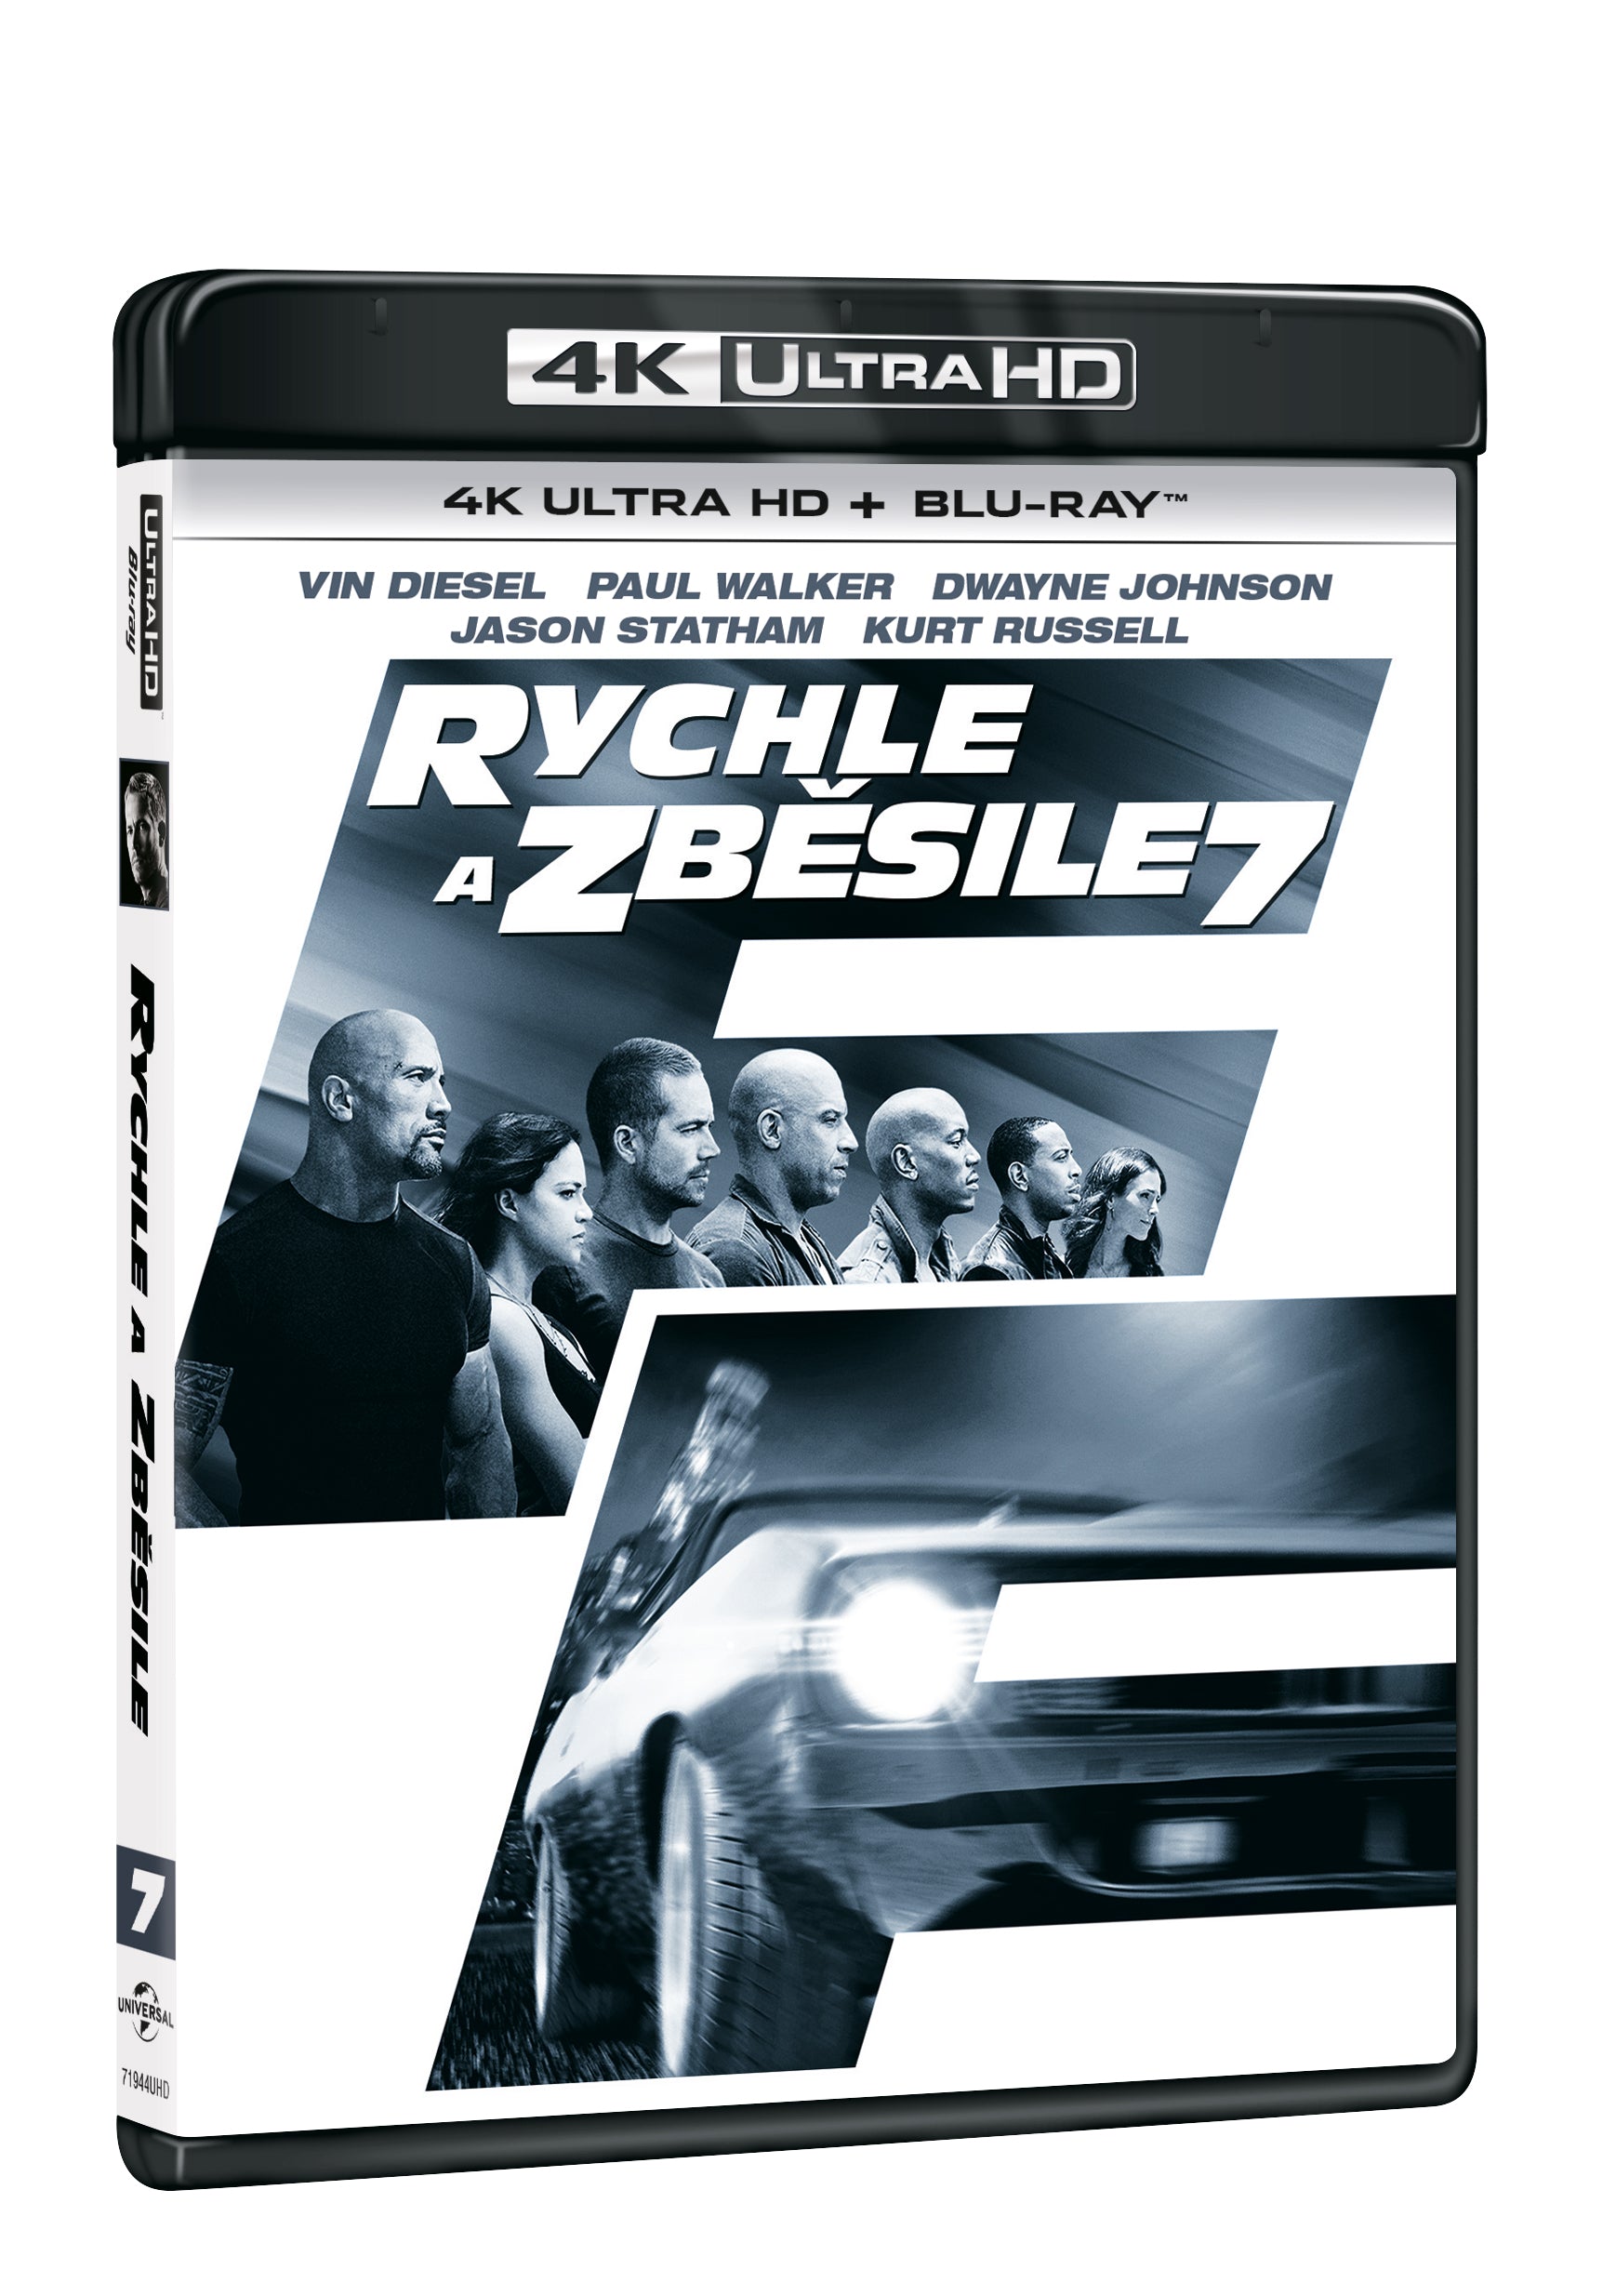 Rychle a zbesile 7 2BD (UHD+BD) / Furious 7 - Czech version